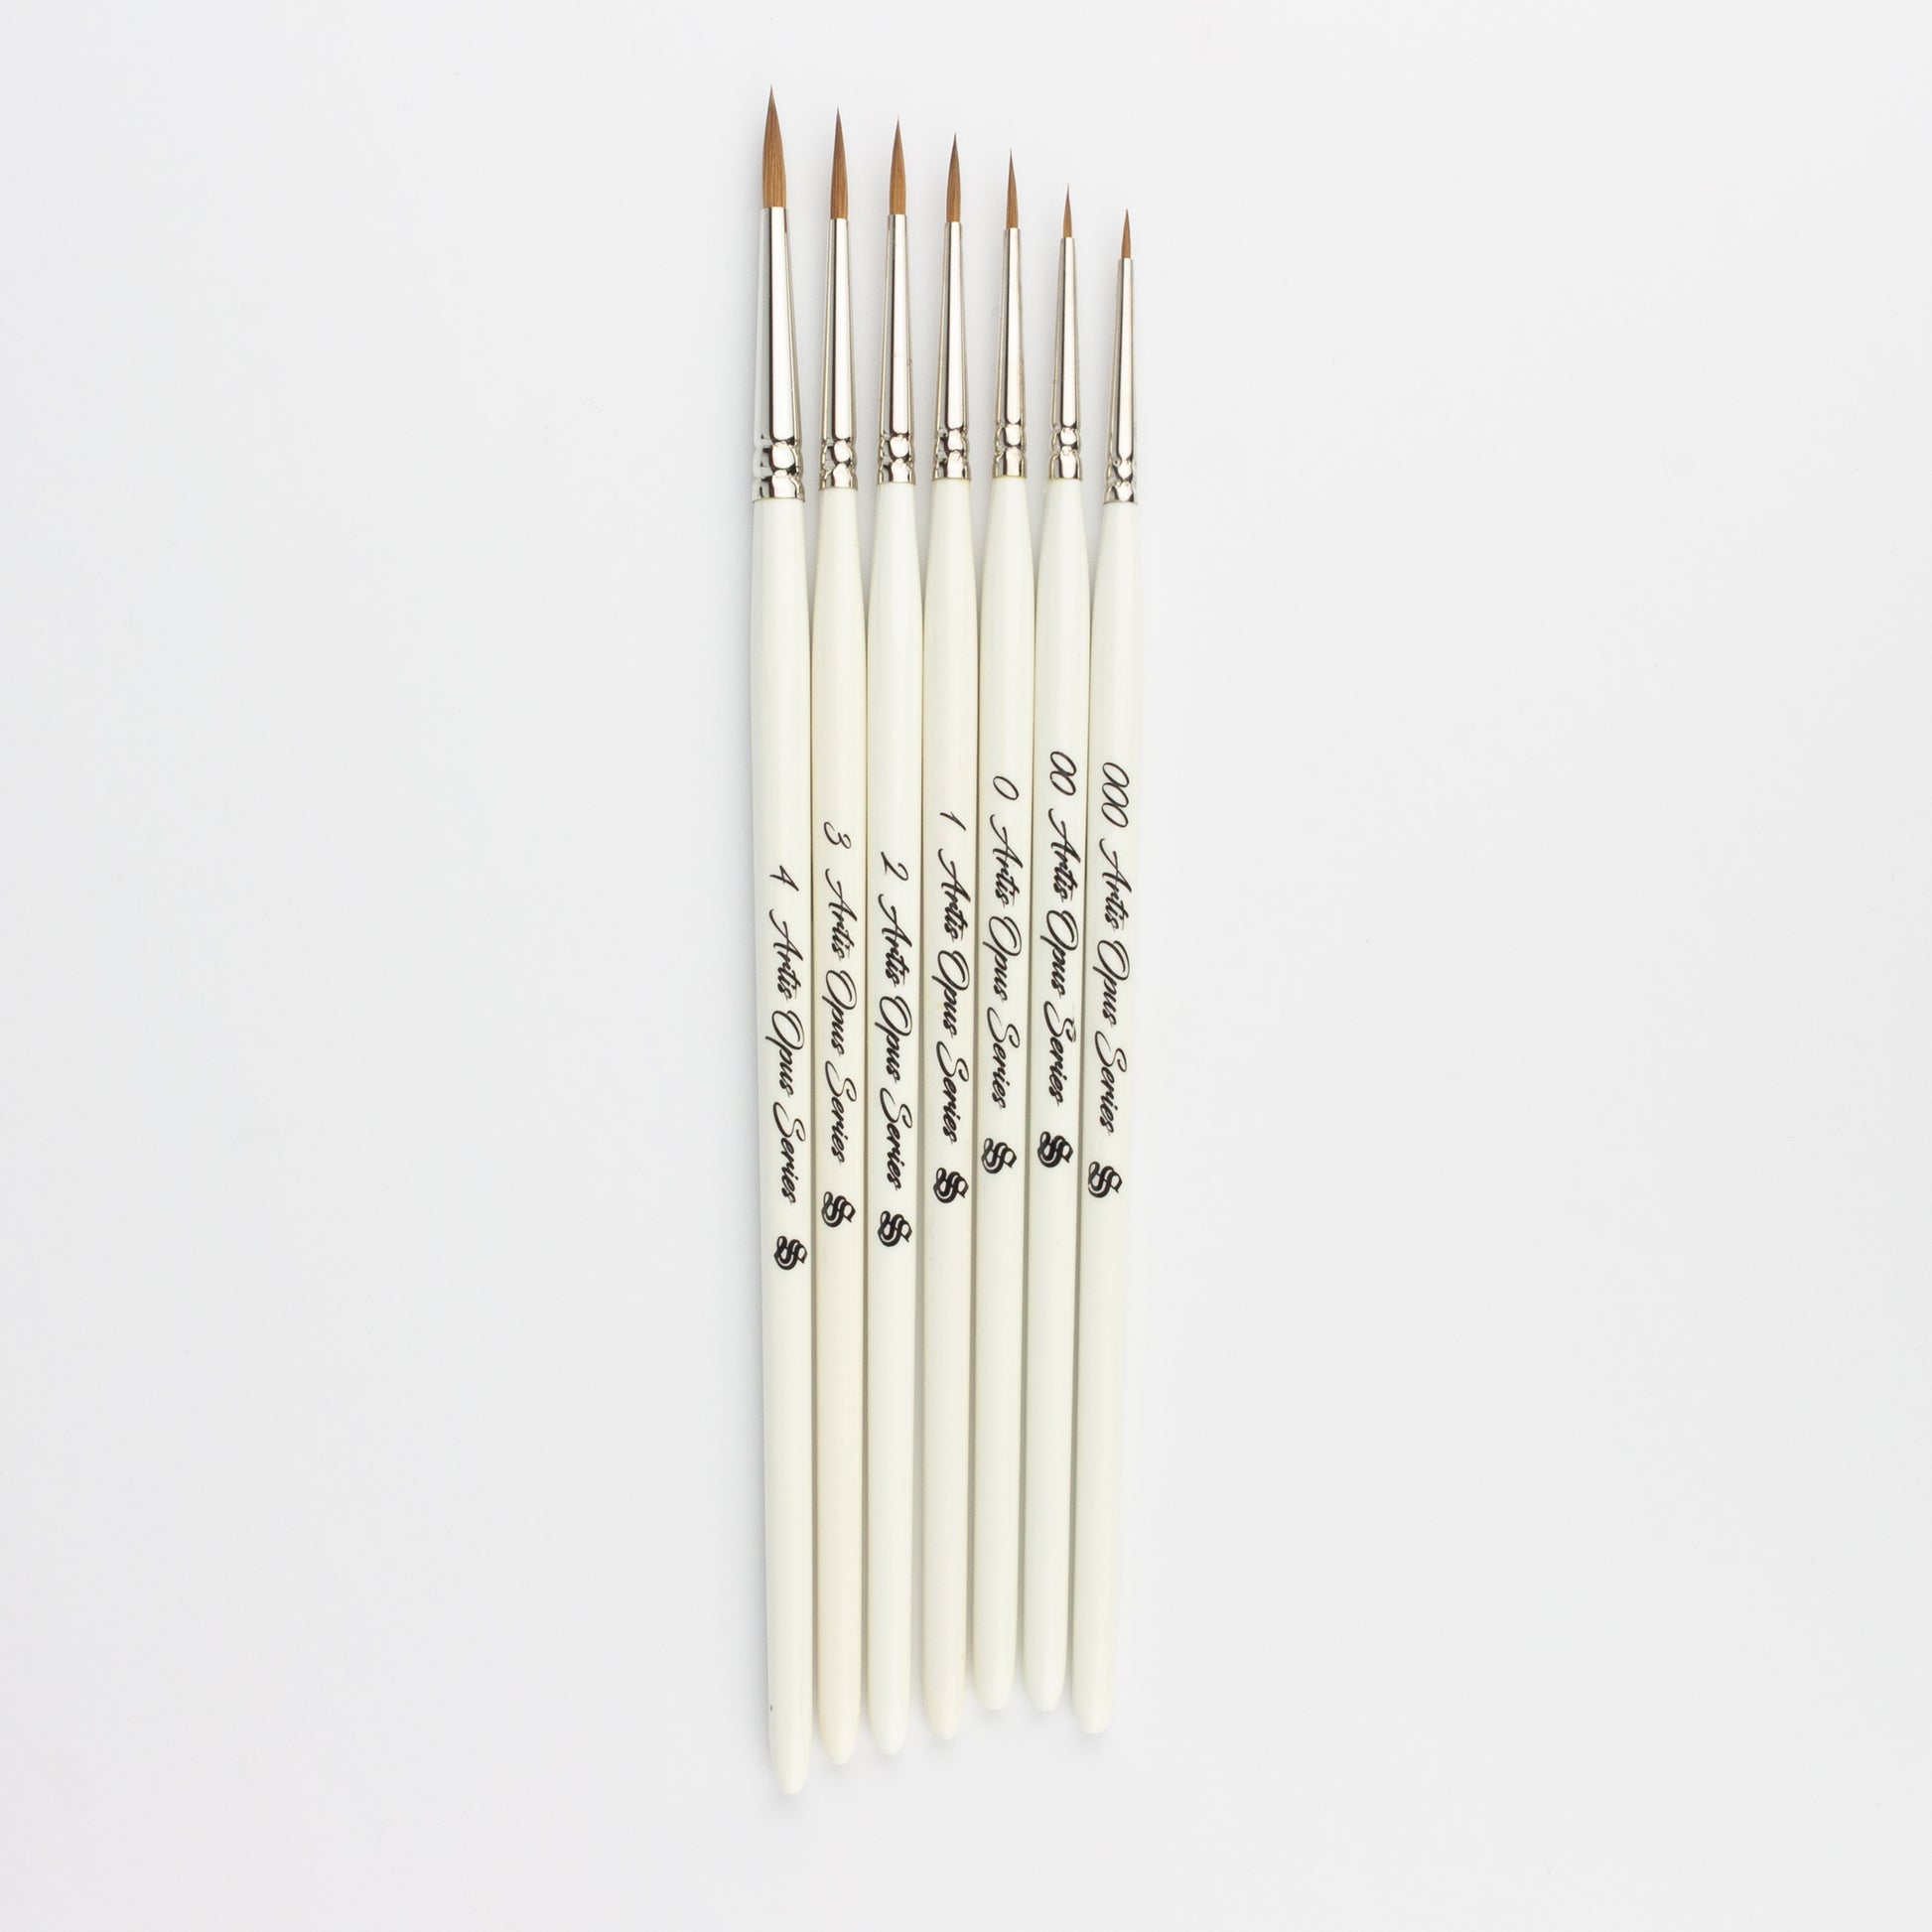 Artis Opus  Quality Paintbrushes for Miniature Painters – Artis